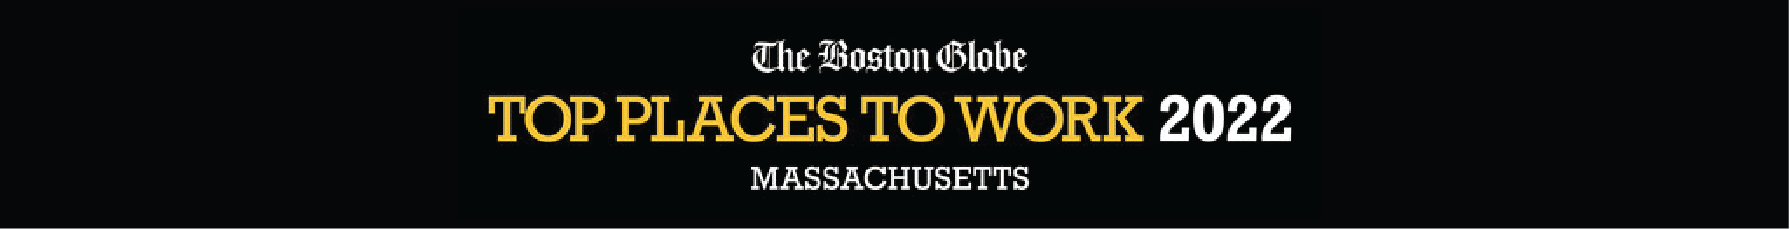 Boston Globe Top Place To Work 2022 Landscape WAV